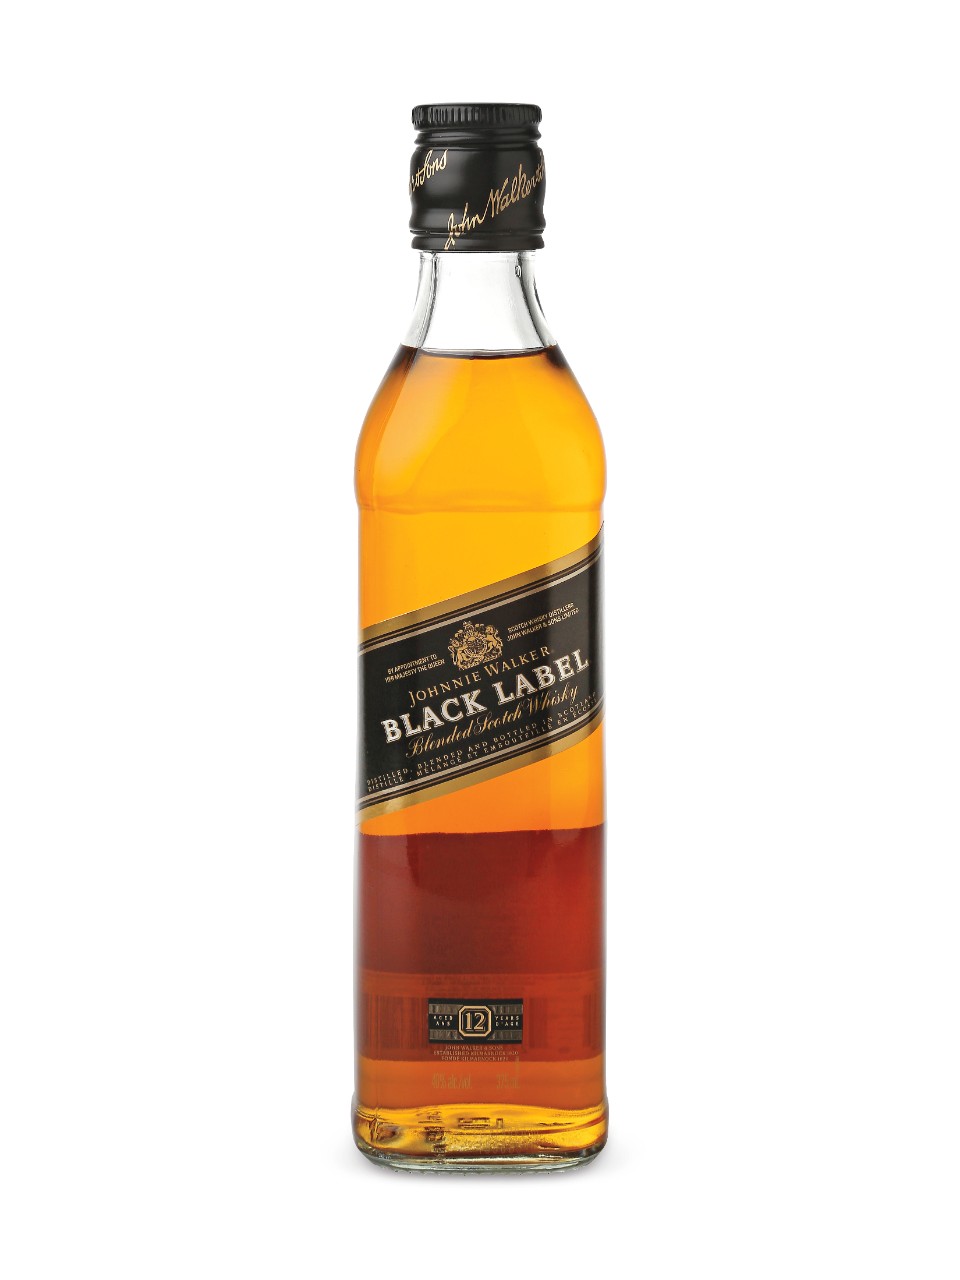 Johnnie Walker Black Label 12 Years Old Scotch Whisky